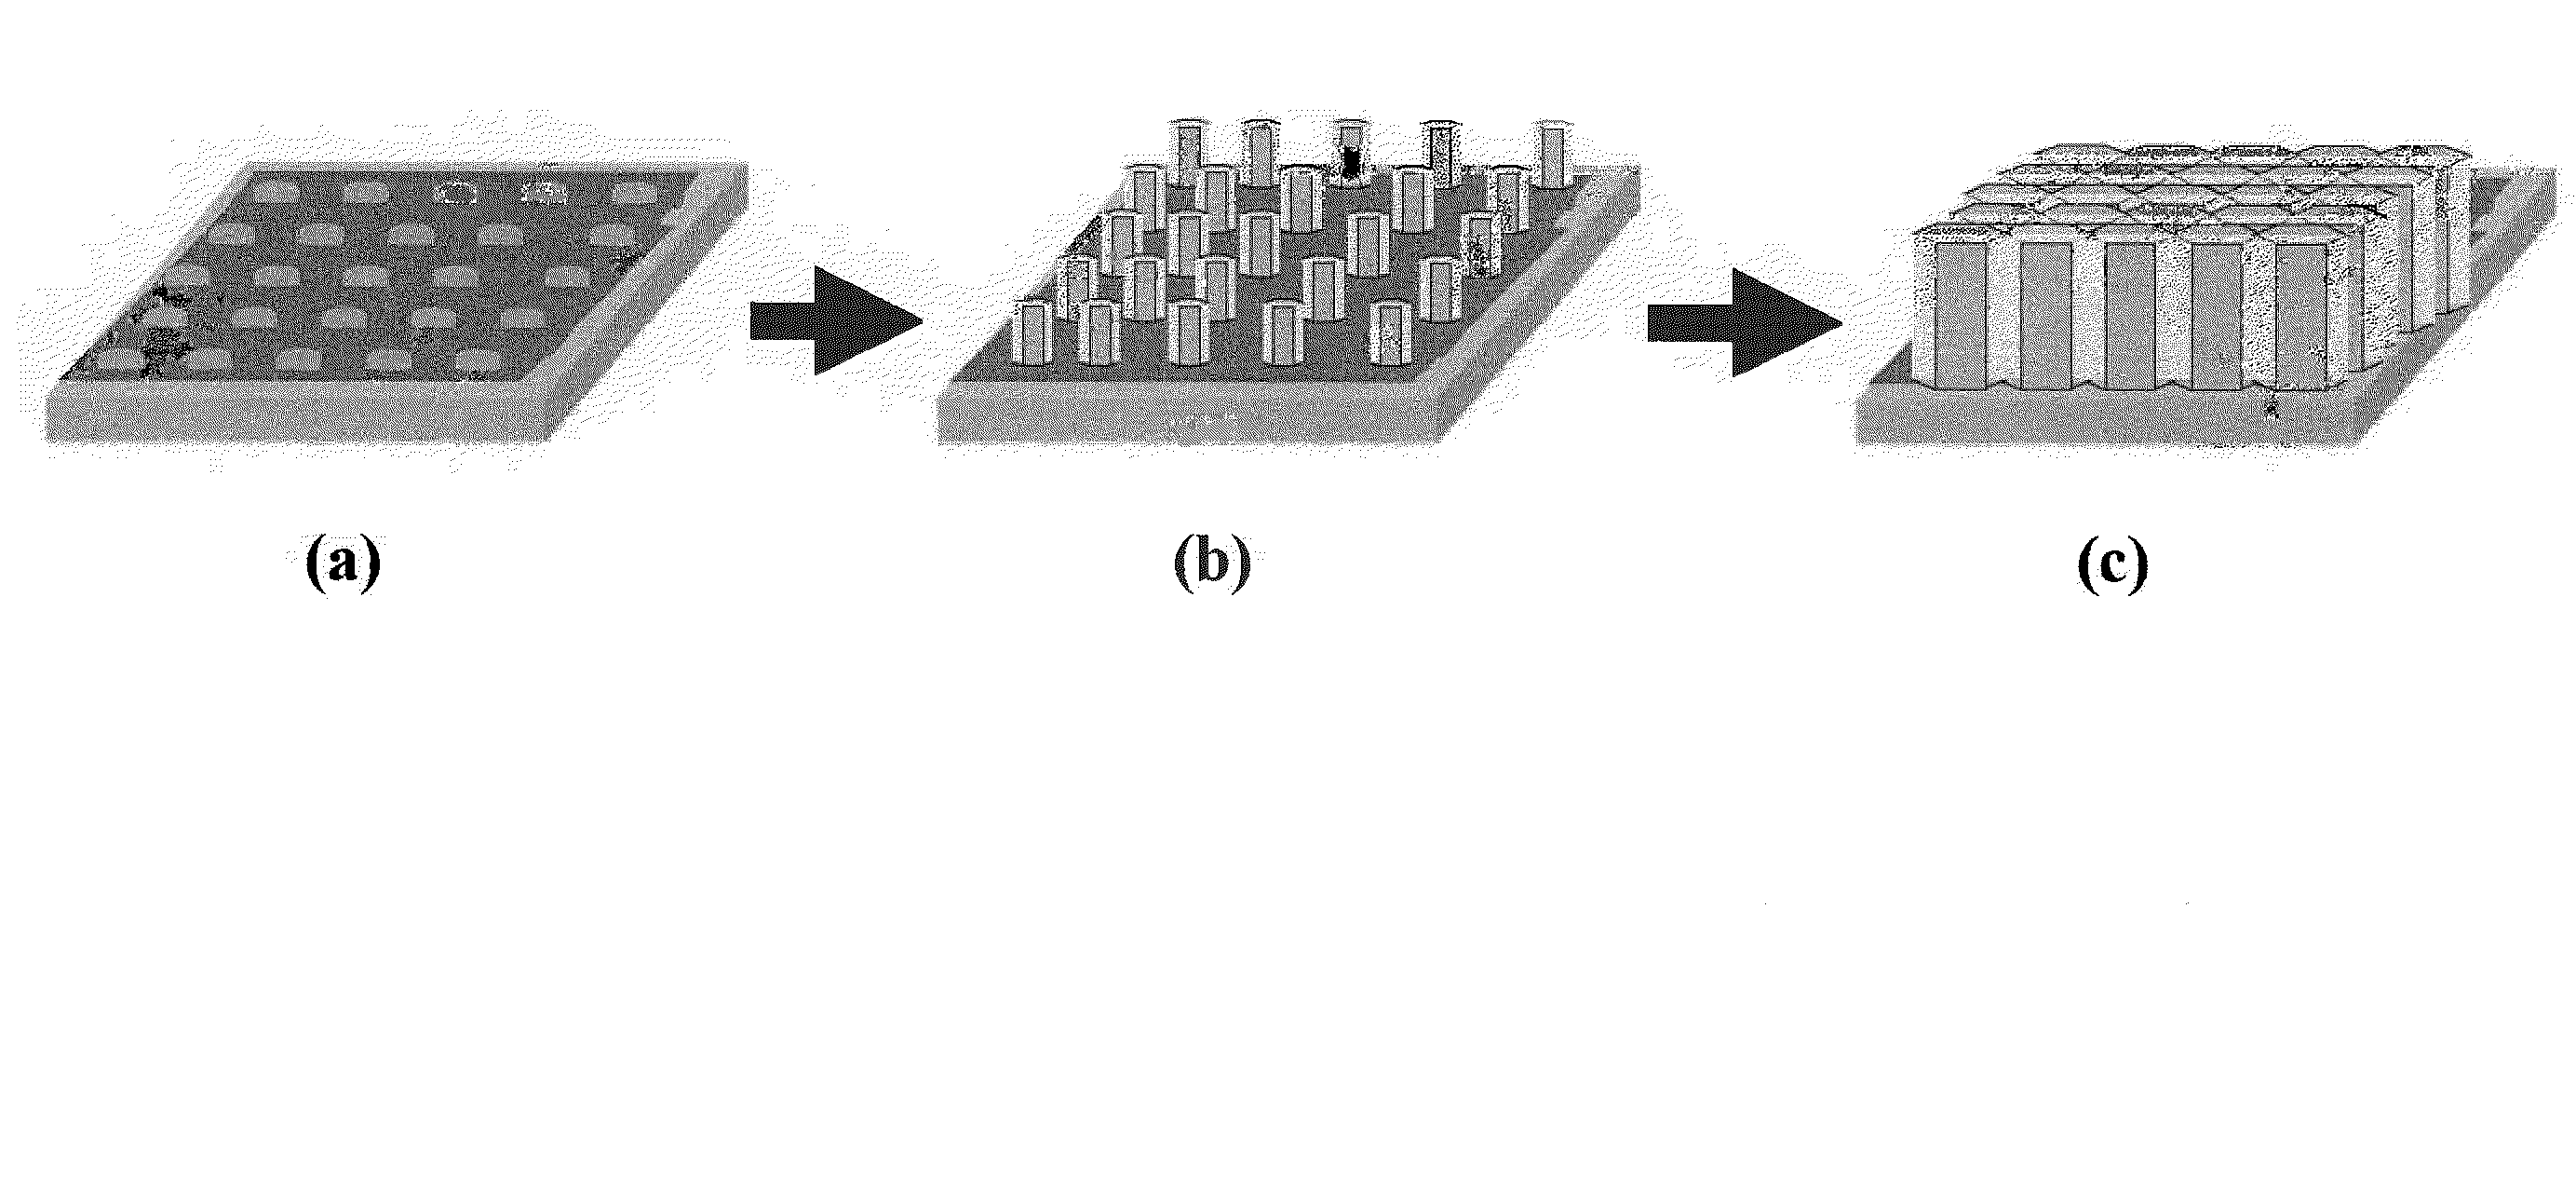 Ion-/proton-conducting apparatus and method